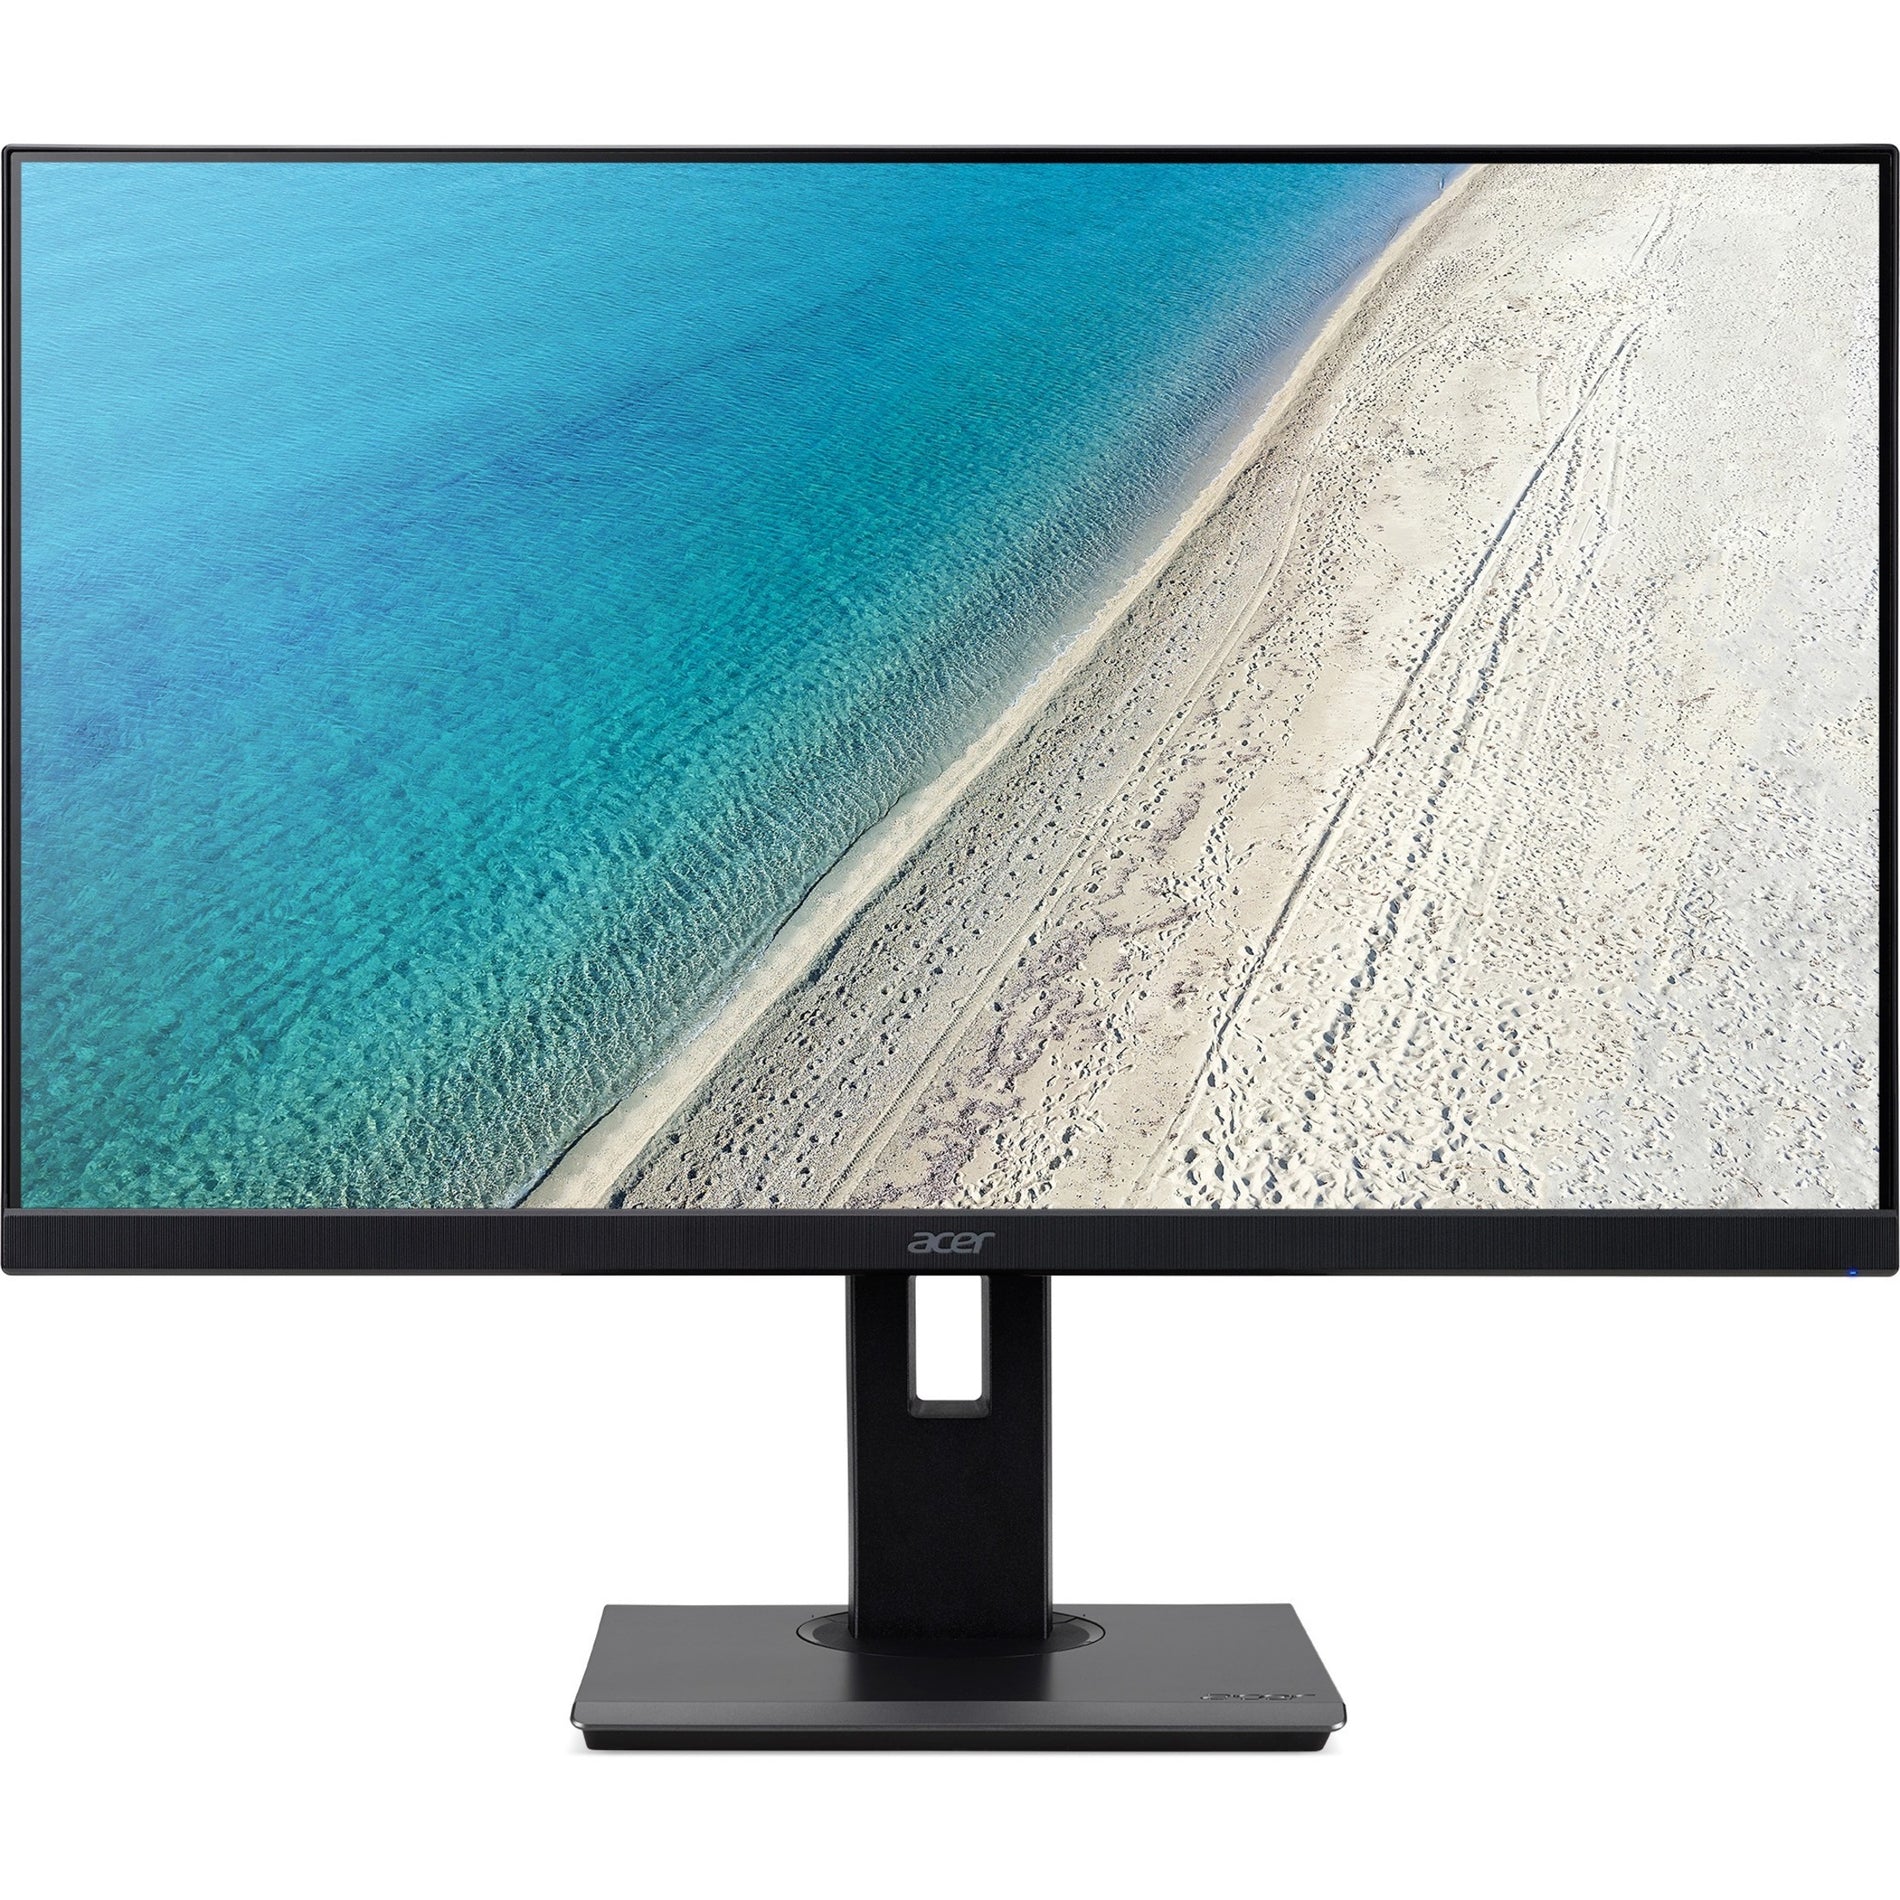 Acer UM.WB7AA.002 B227Q Widescreen LCD Monitor, 21.5", Full HD, Wall Mountable